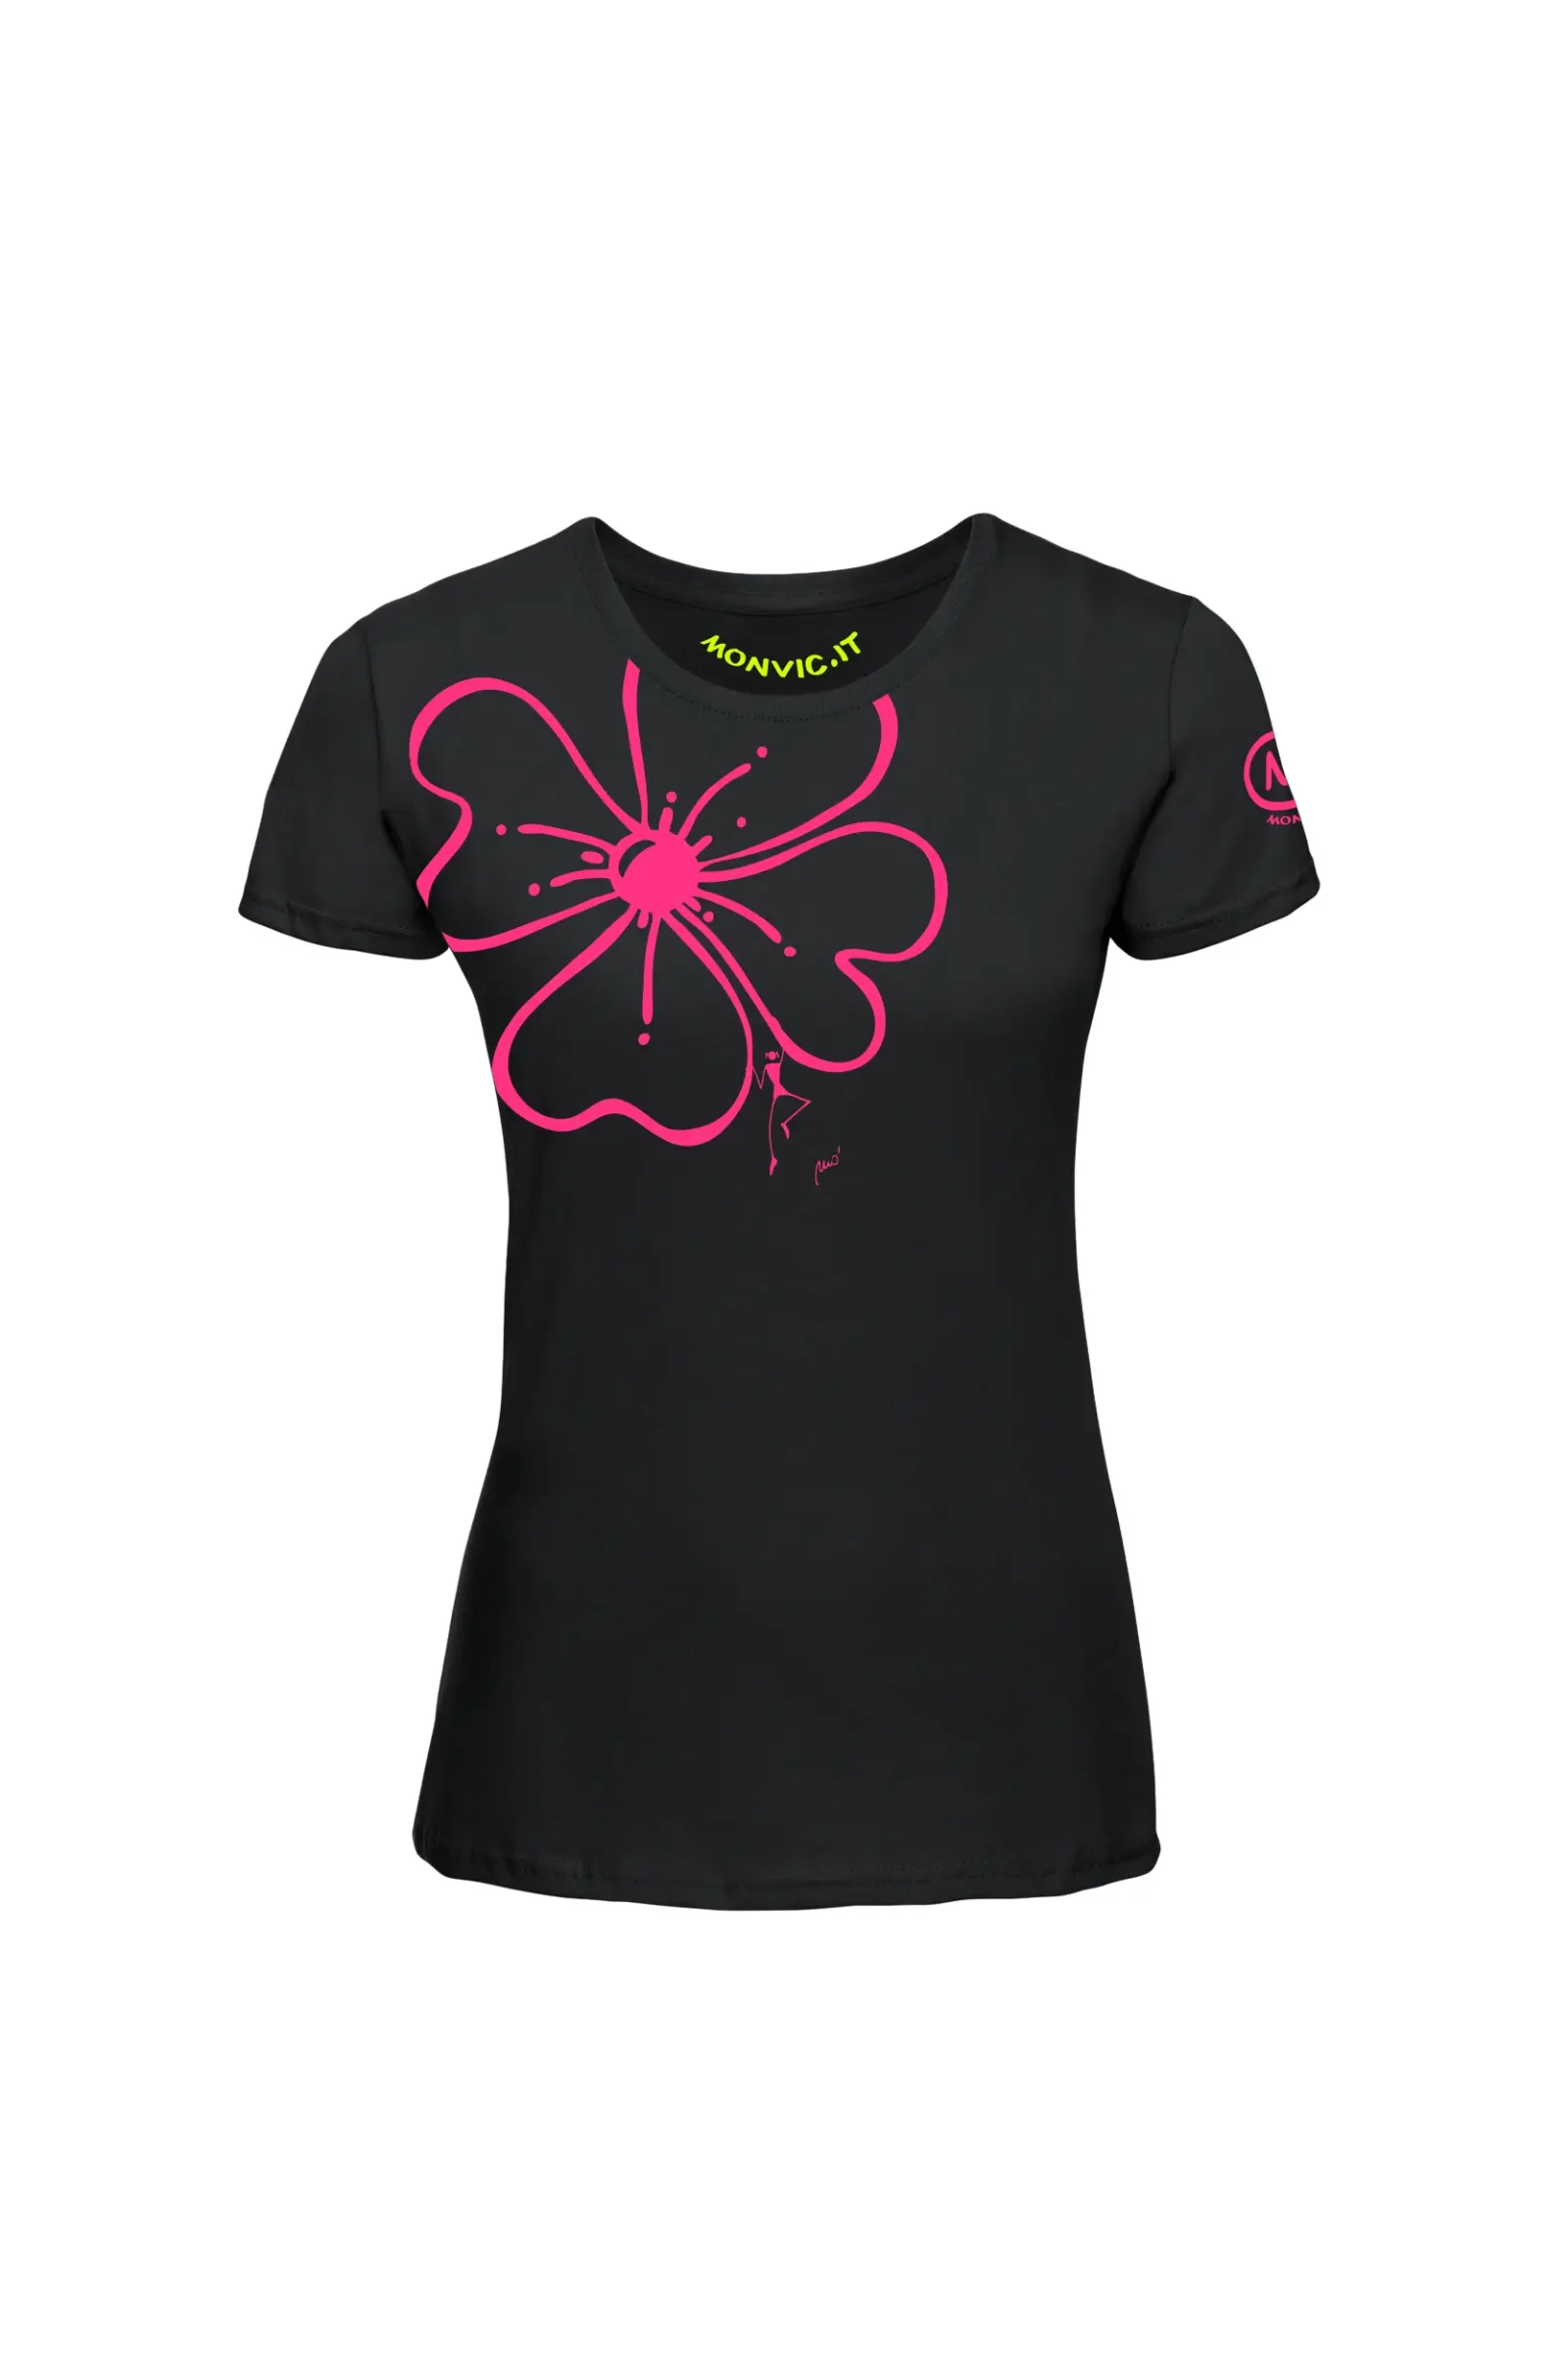 Women's climbing t-shirt - black cotton - "Superflower" SHARON MONVIC